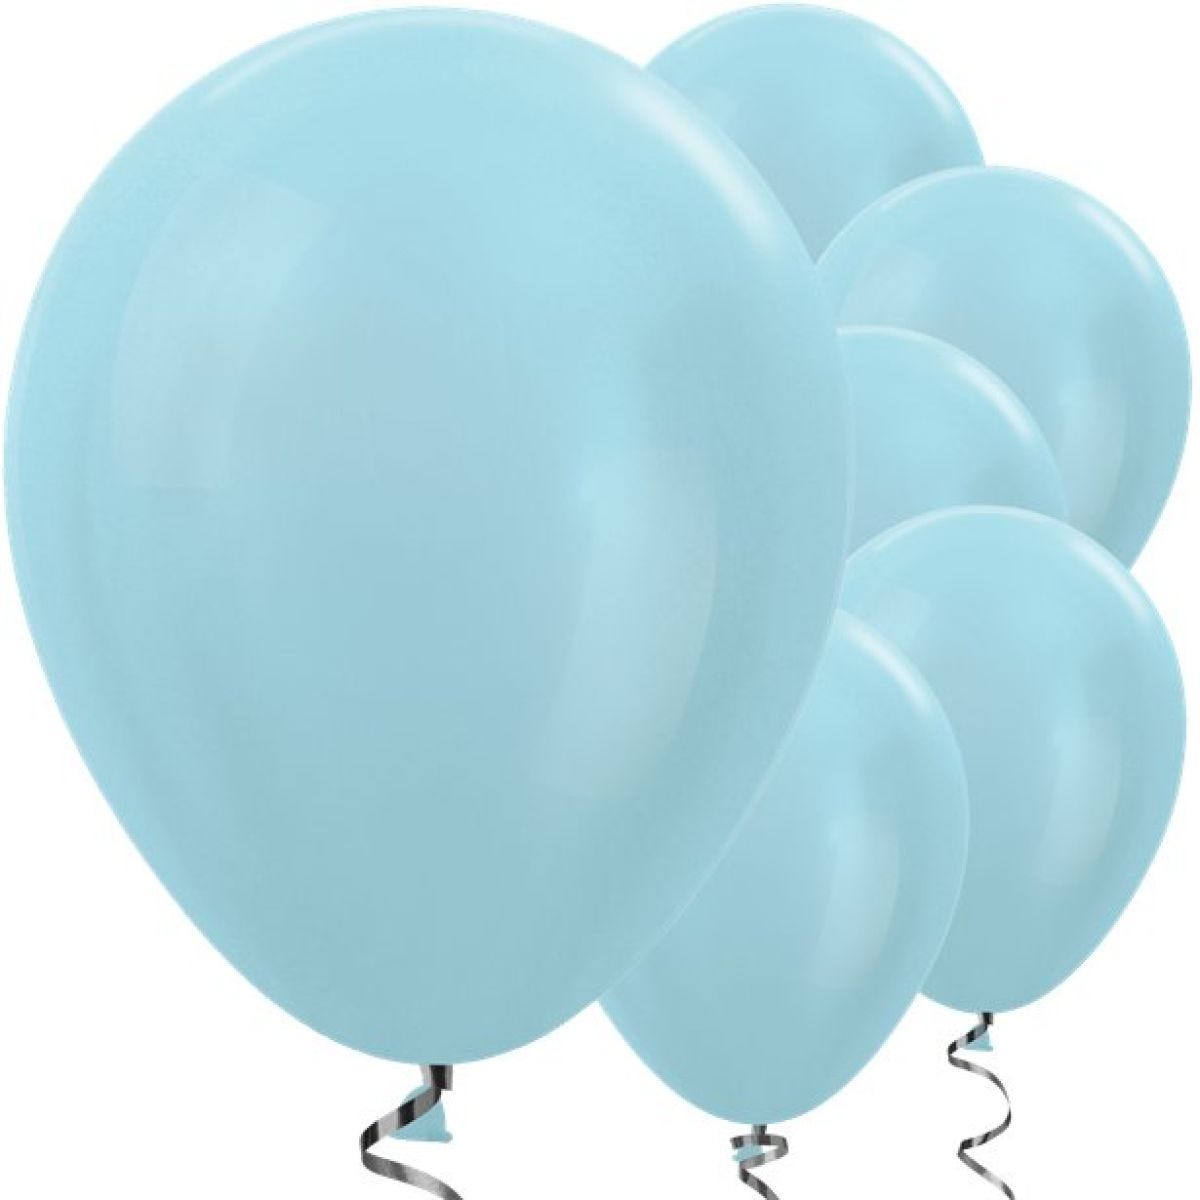 Blue Satin Balloons - 12" Latex Balloons